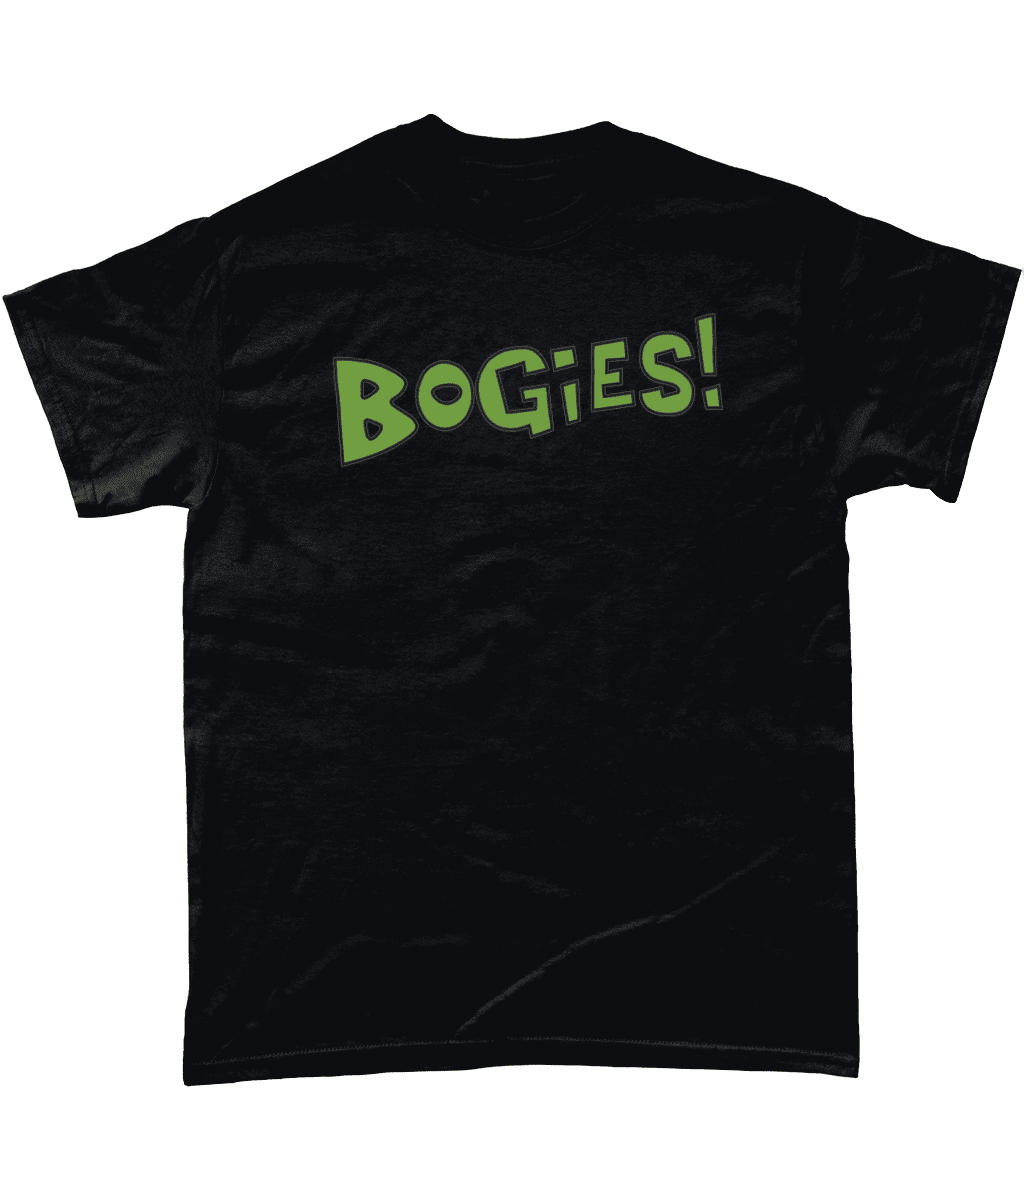 Bogies Dick and Dom T Shirt Black